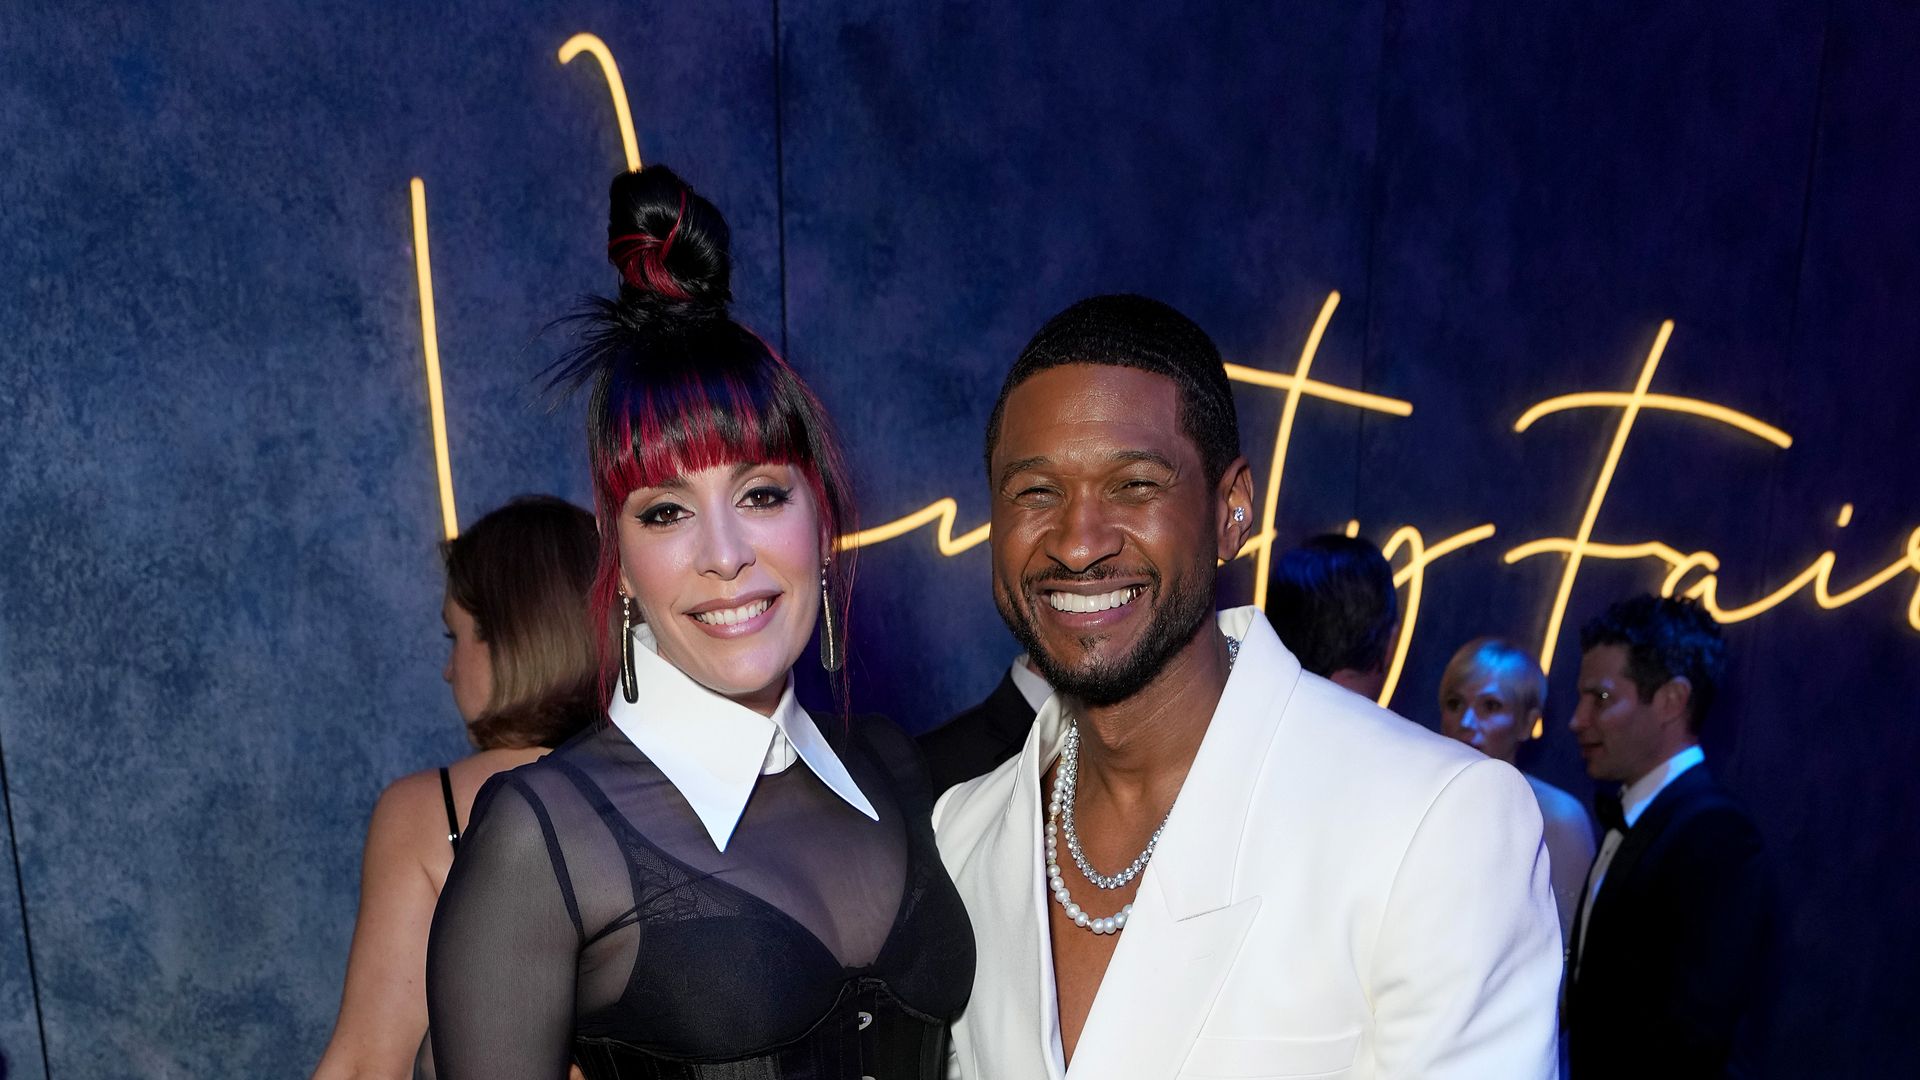 Usher and Jennifer Goicoechea obtain marriage license ahead of  Super Bowl performance